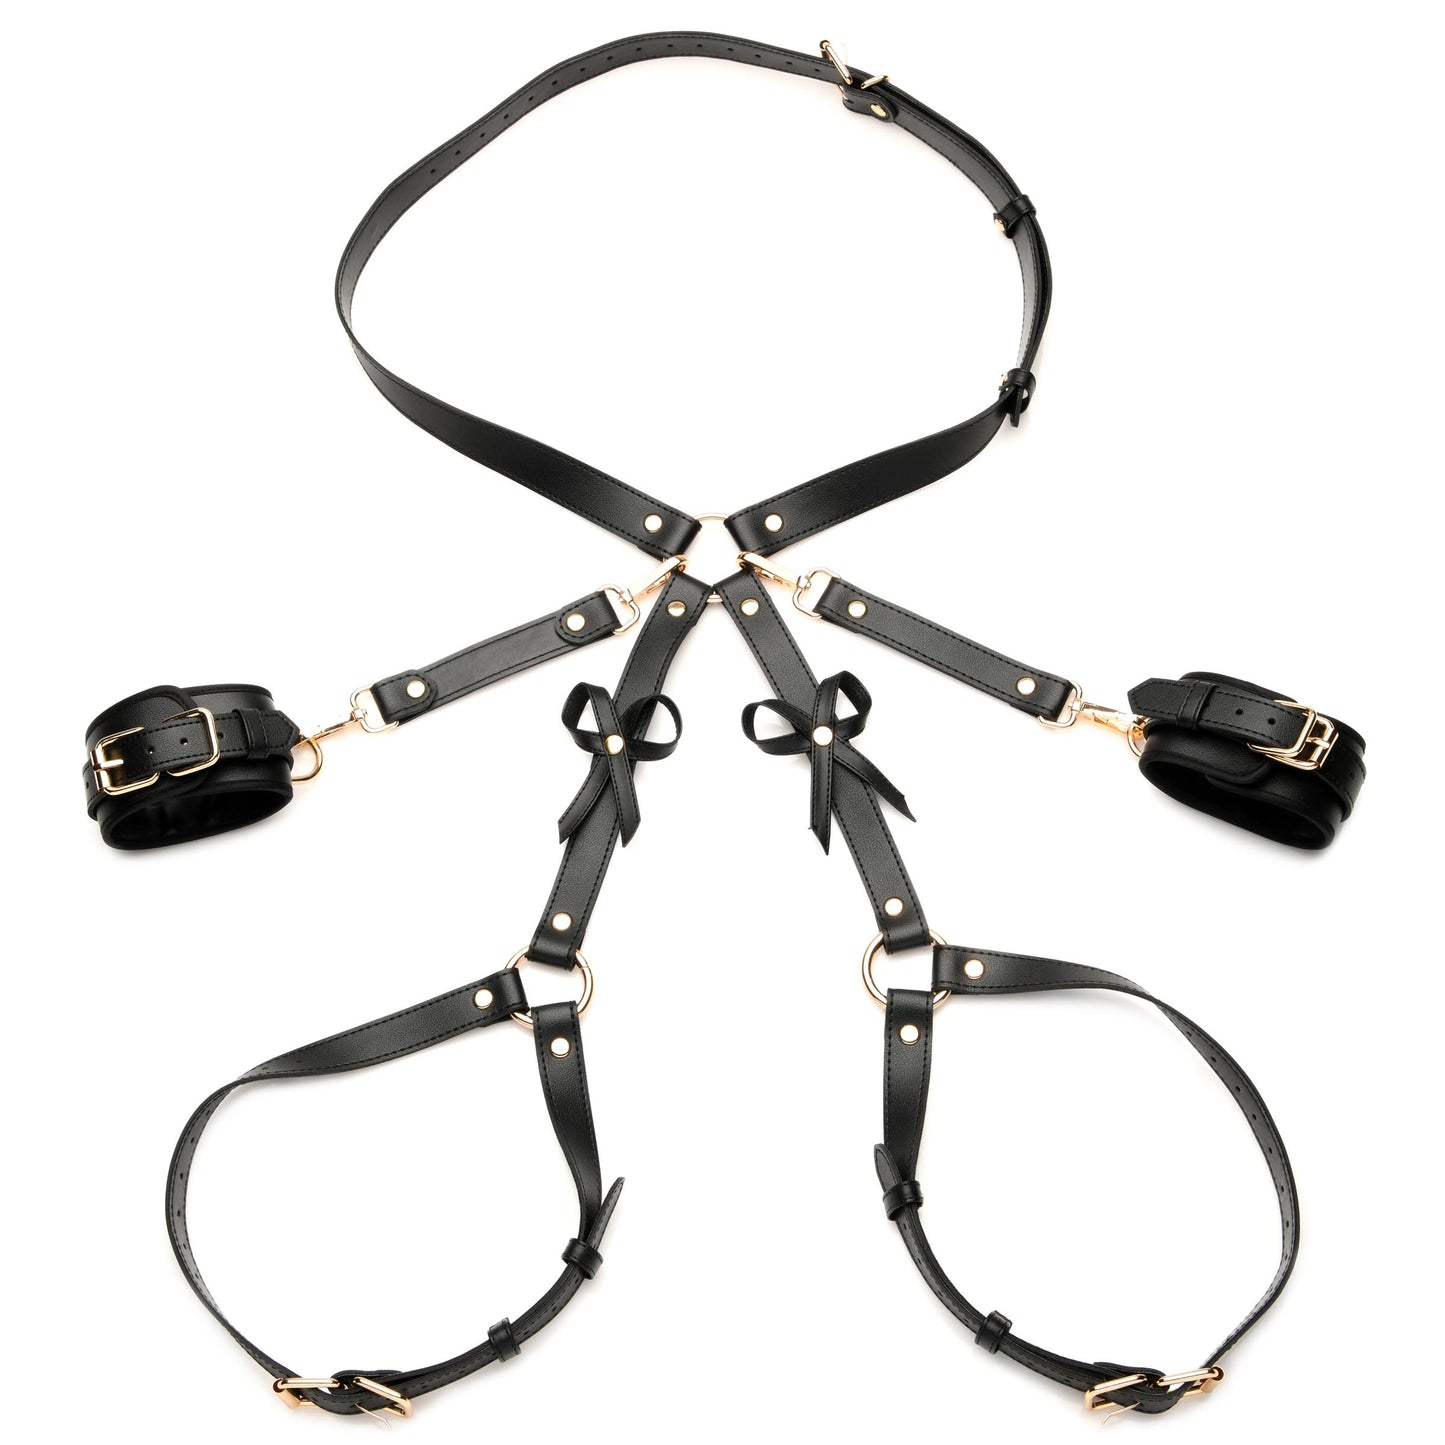 Black Bondage Thigh Harness with Bows - M/L